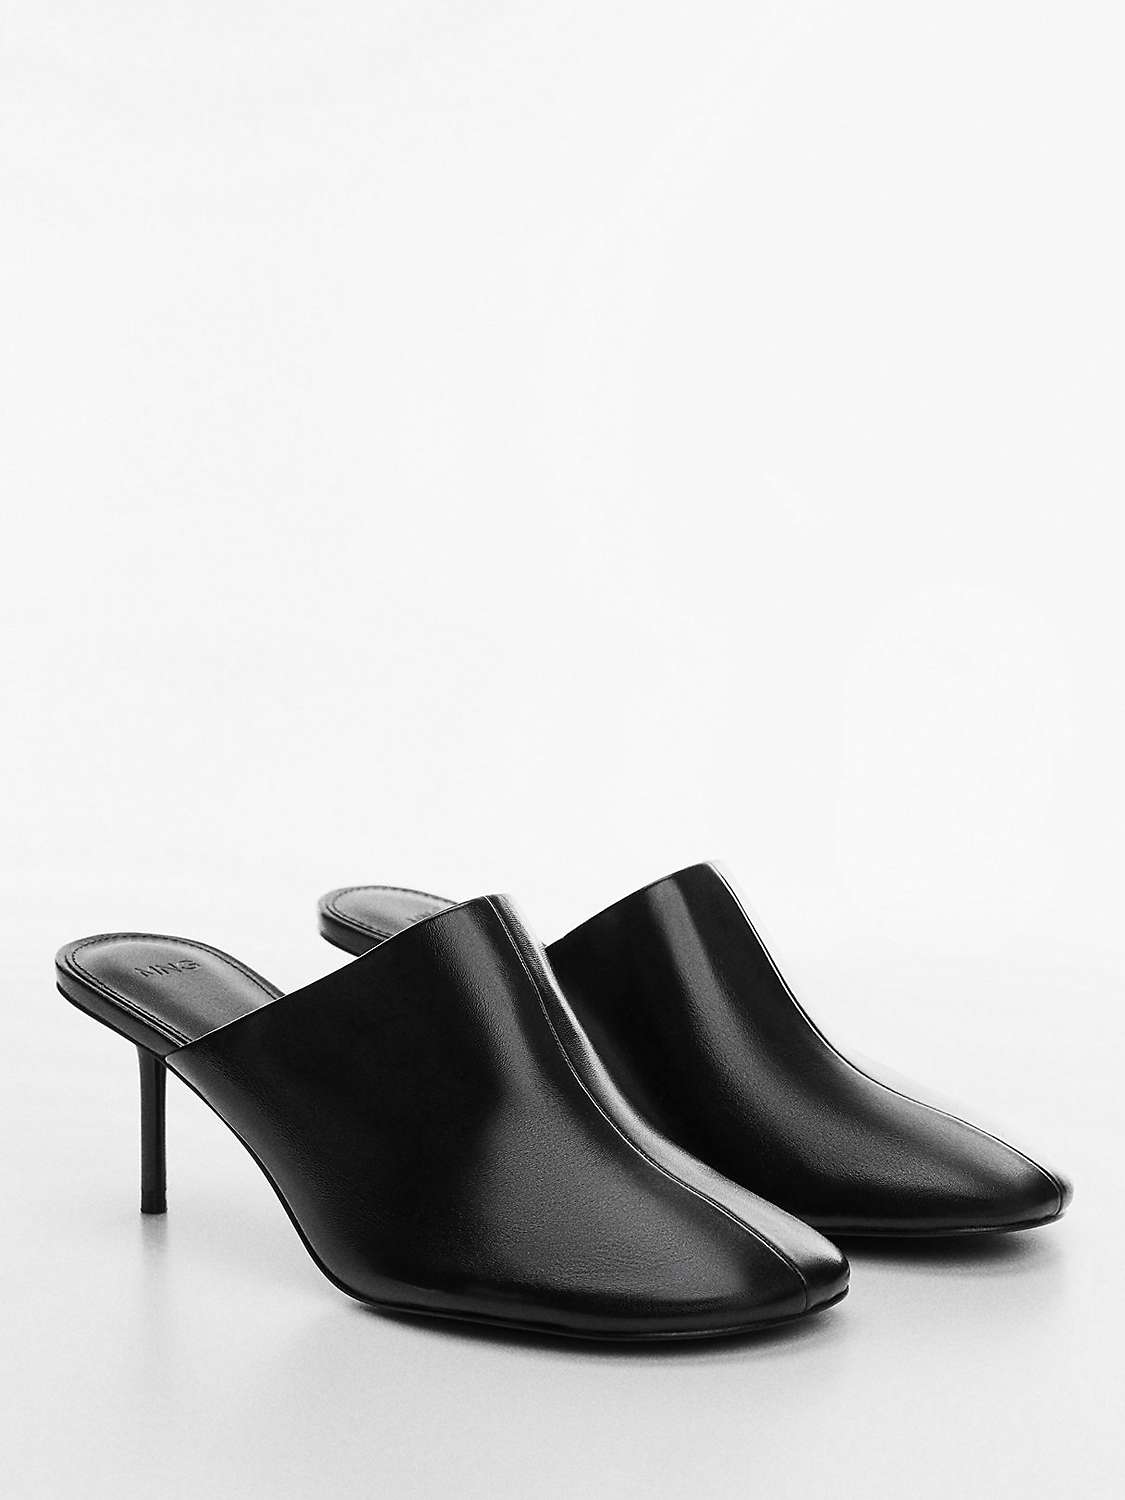 Mango Shine Mid Heel Shoes, Black at John Lewis & Partners